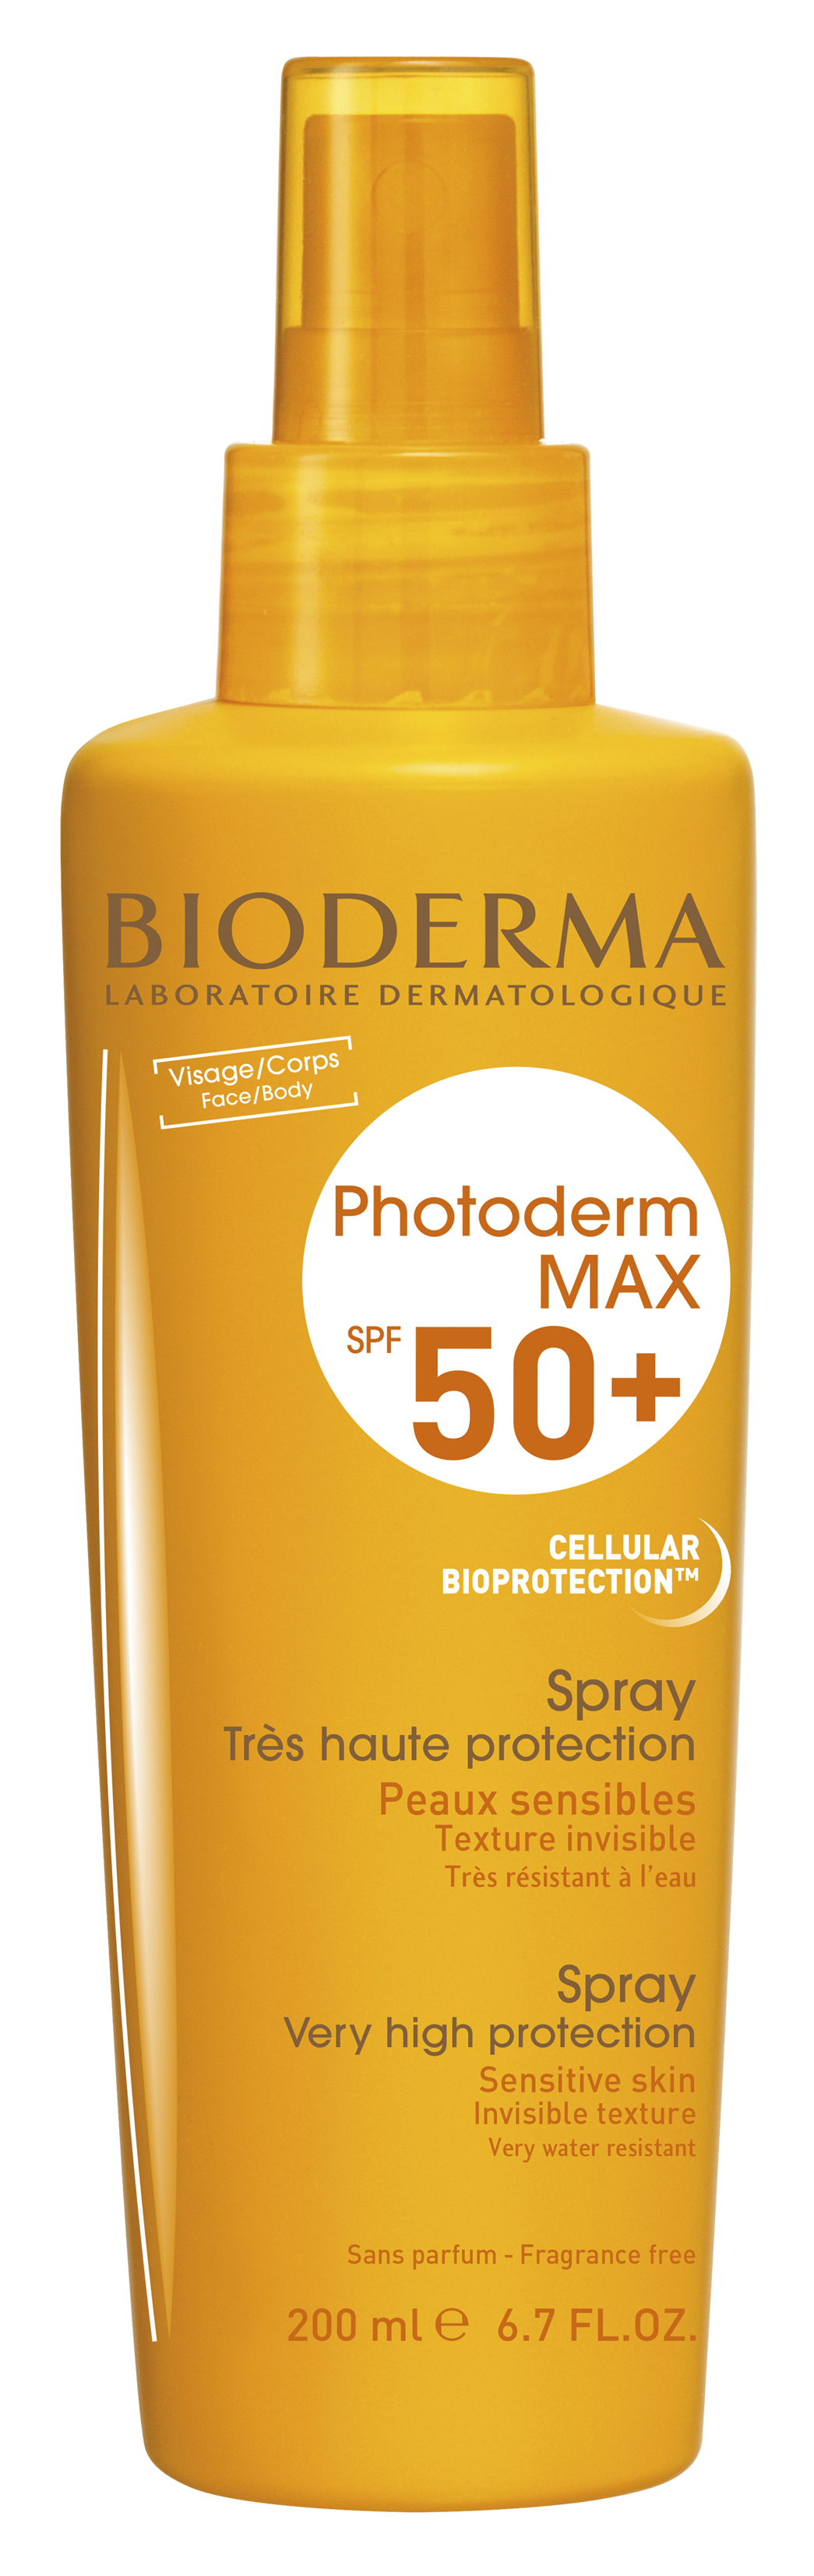 Bioderma Photoderm MAX Spray SPF50+ for Sensitive Skin 200ml